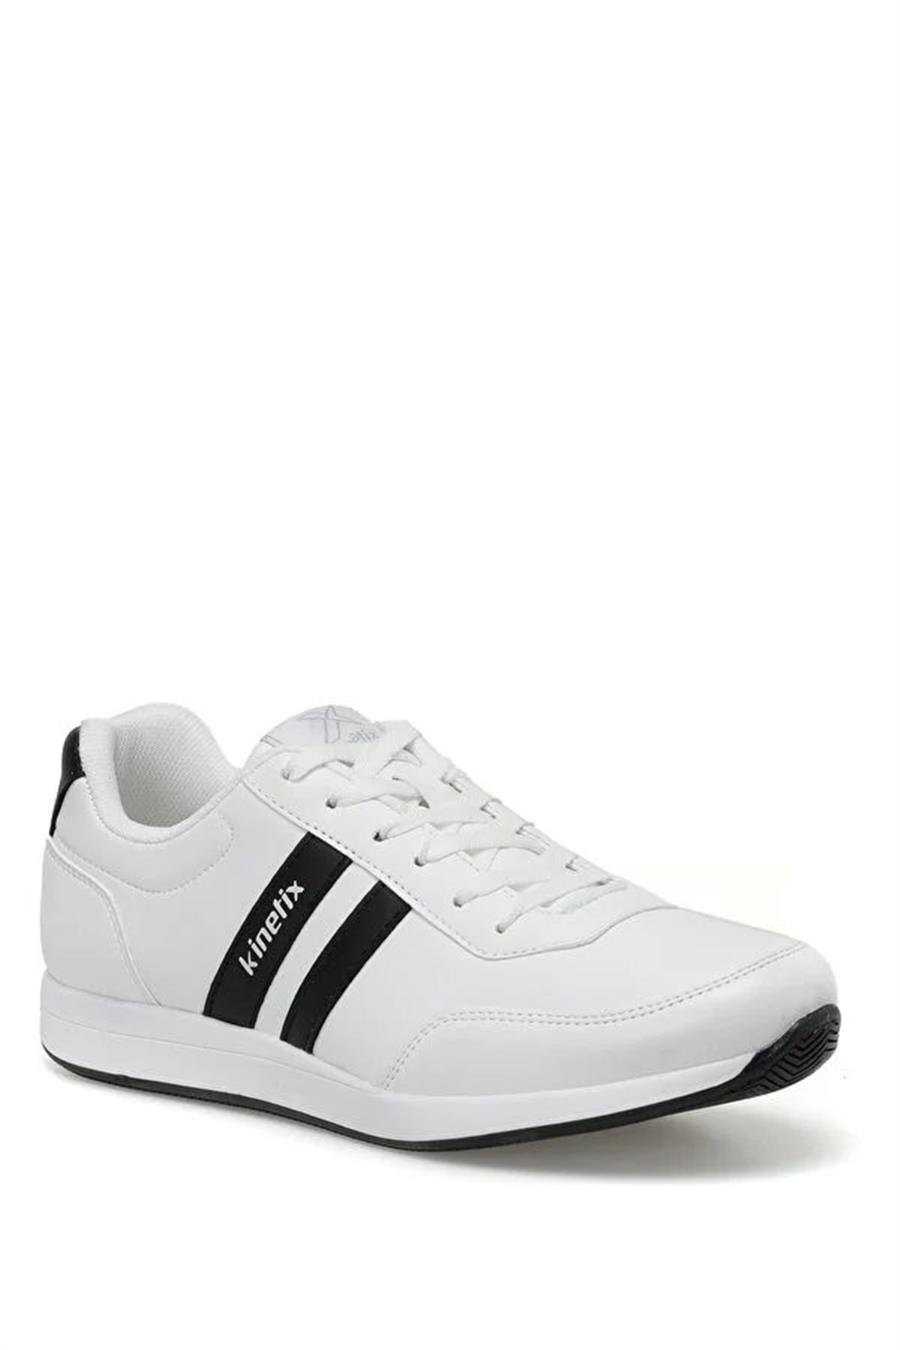 Kinetix Reeds Pu 3Pr Beyaz Erkek Sneaker Ayakkabı